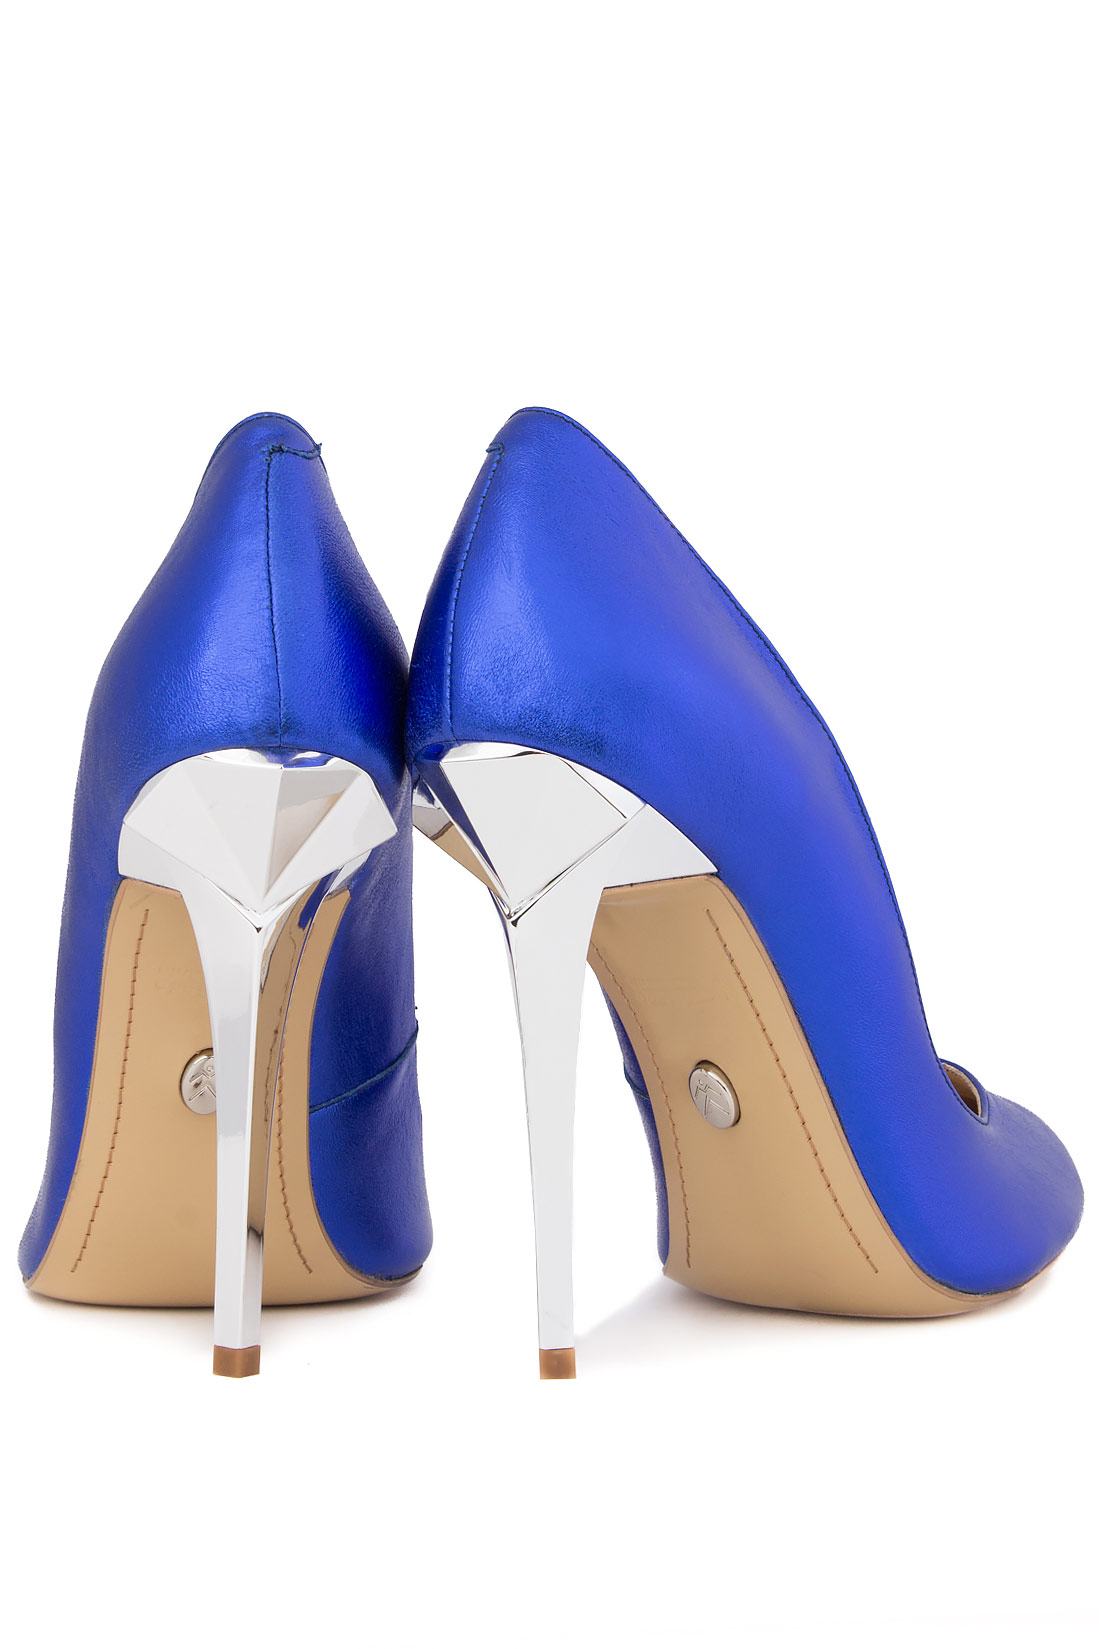 Pantofi stiletto albastru metalizat MIHAI ALBU SECOND HAND imagine 1